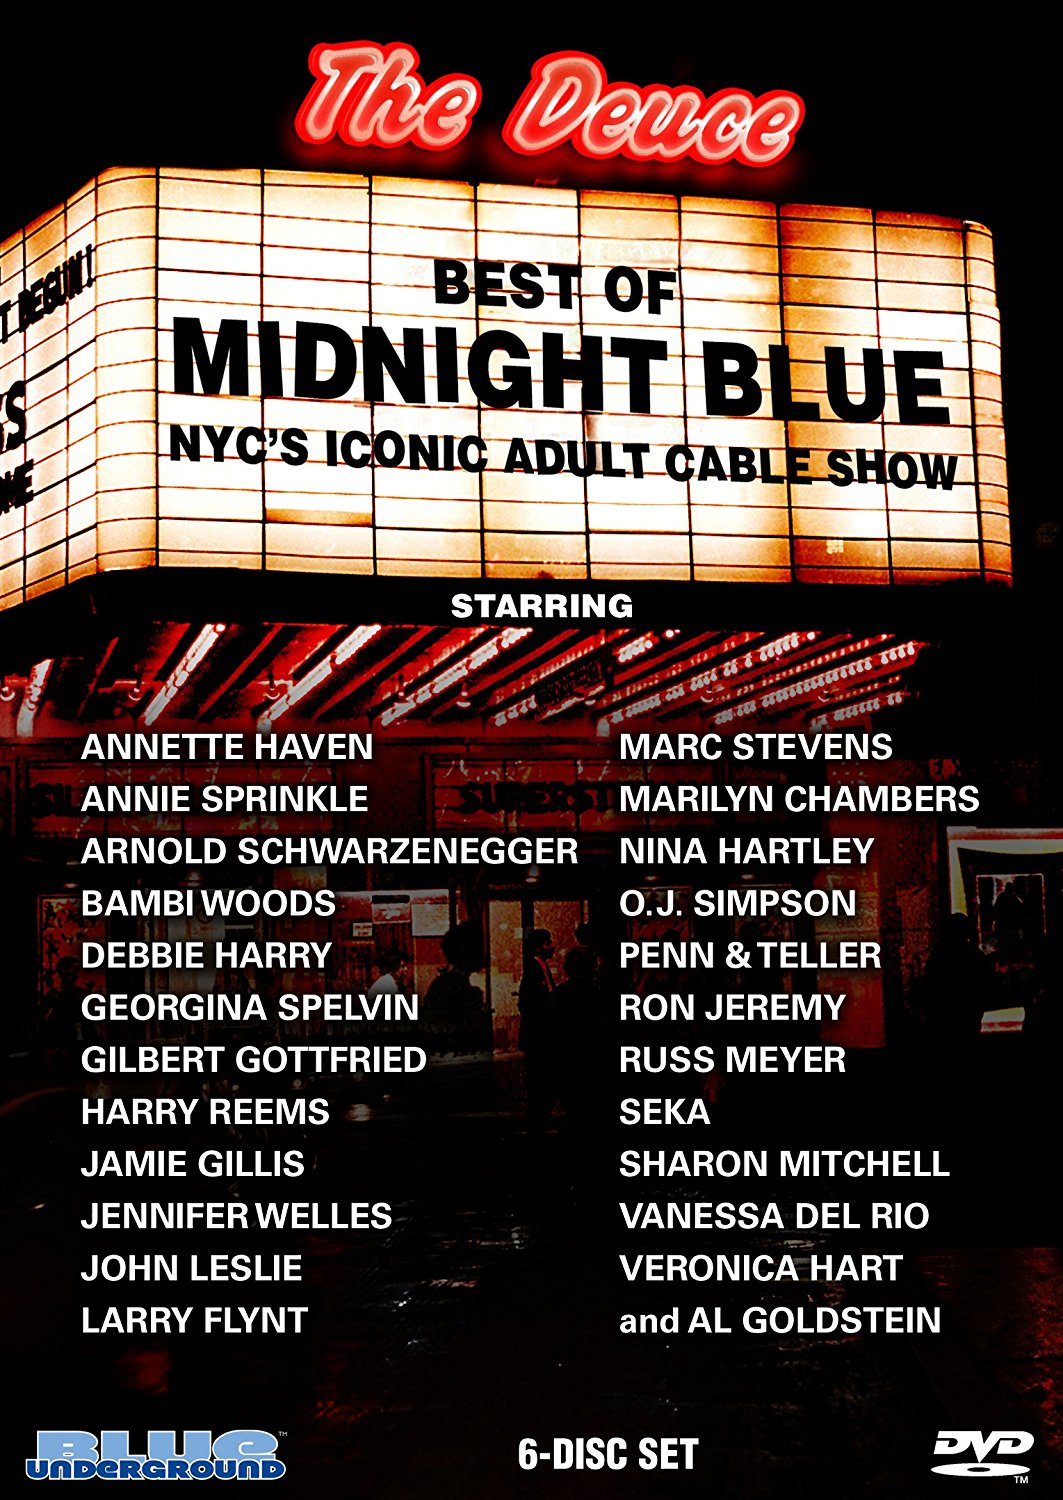 The Best Of Midnight Blue Dvd